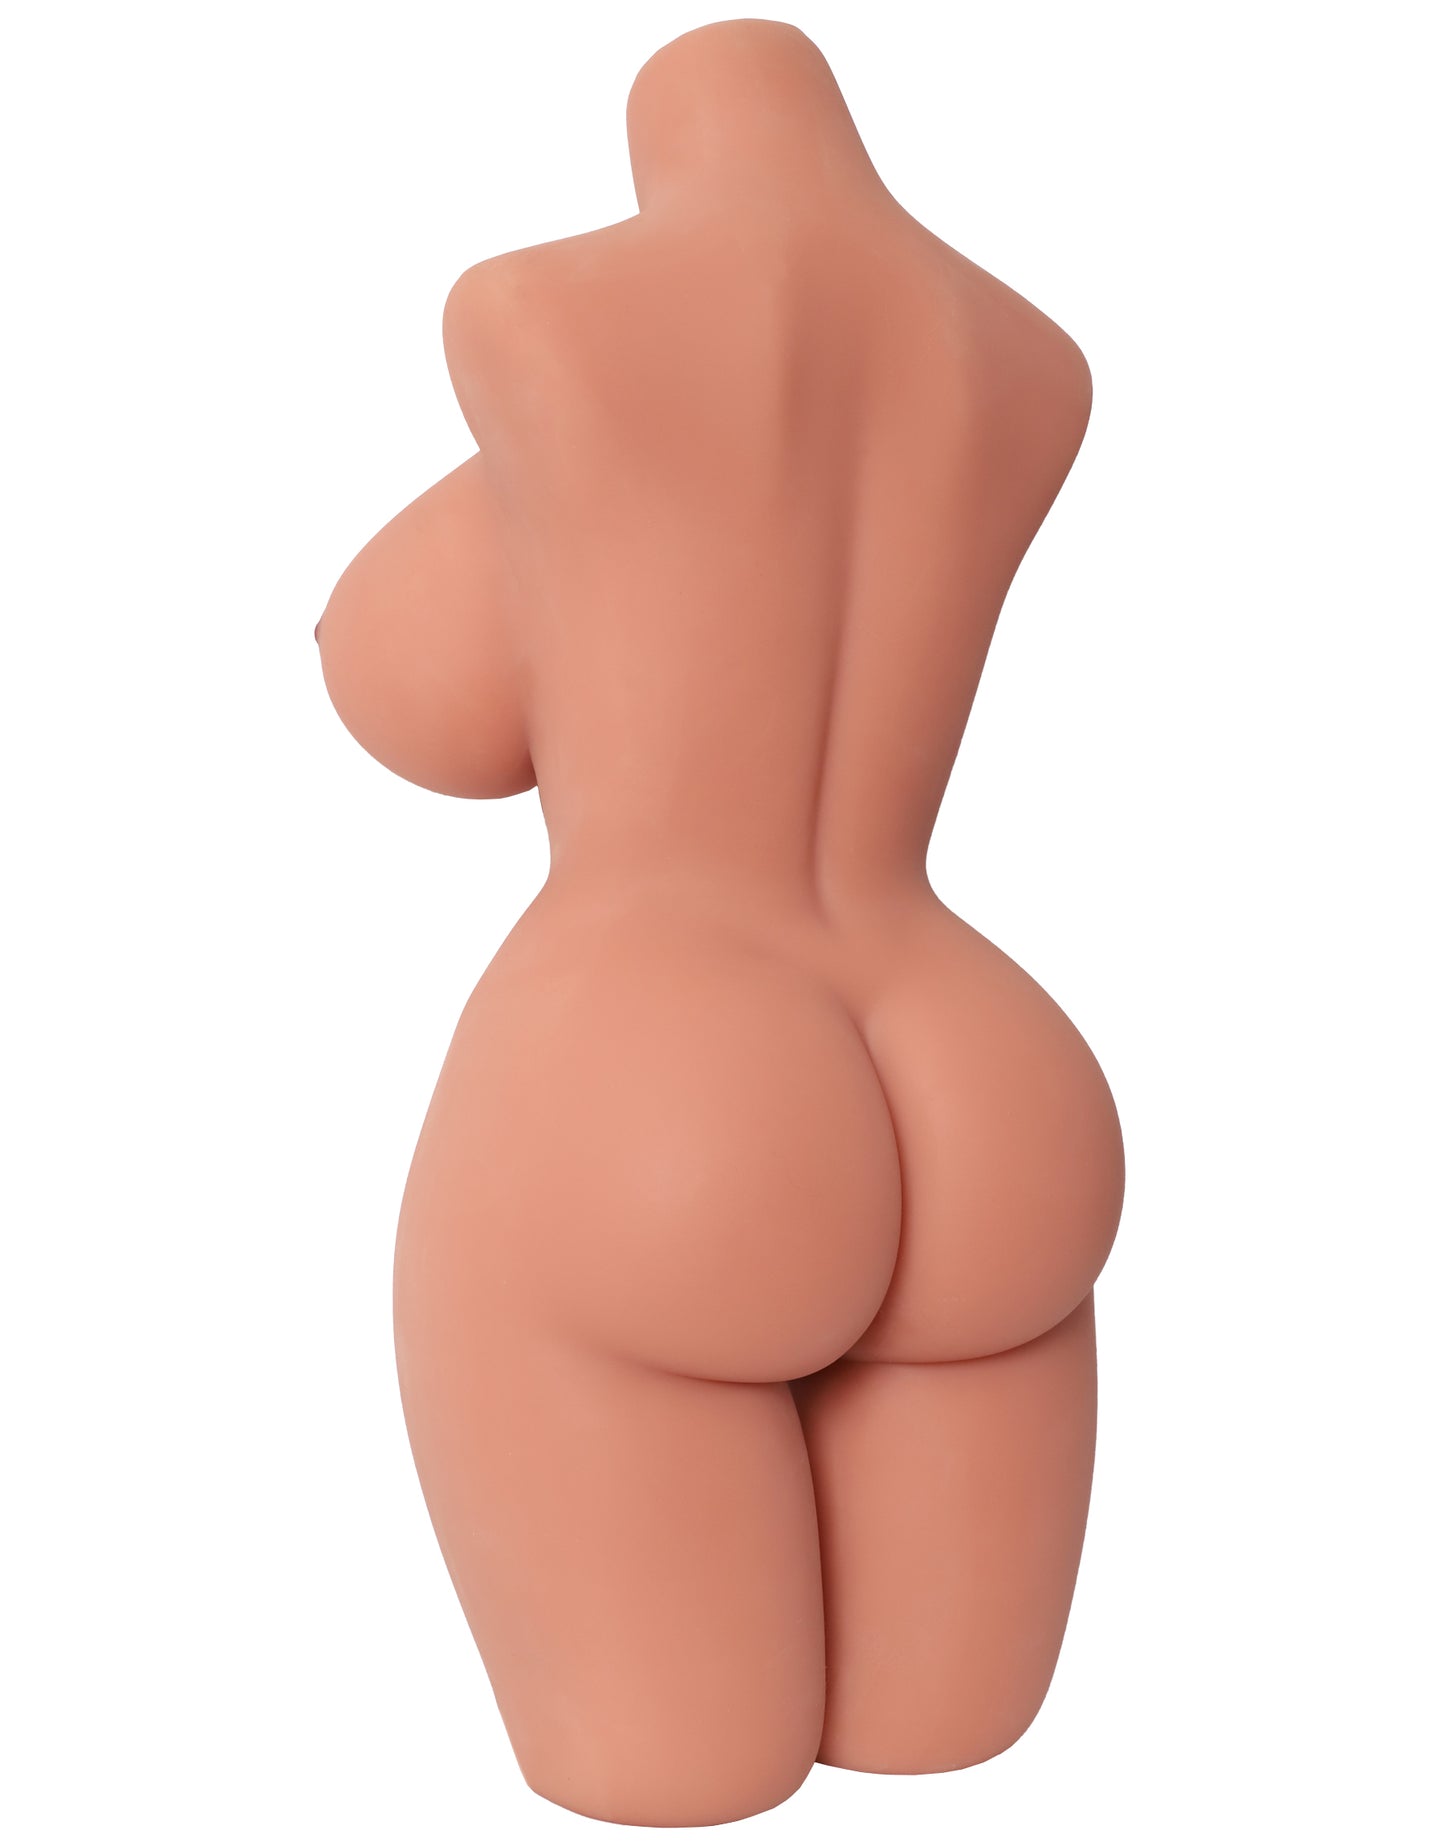 (Wheat Skin) Lifelike Sex Doll Torso Male Masturbator with Realistic Big Boobs Butt 38LB